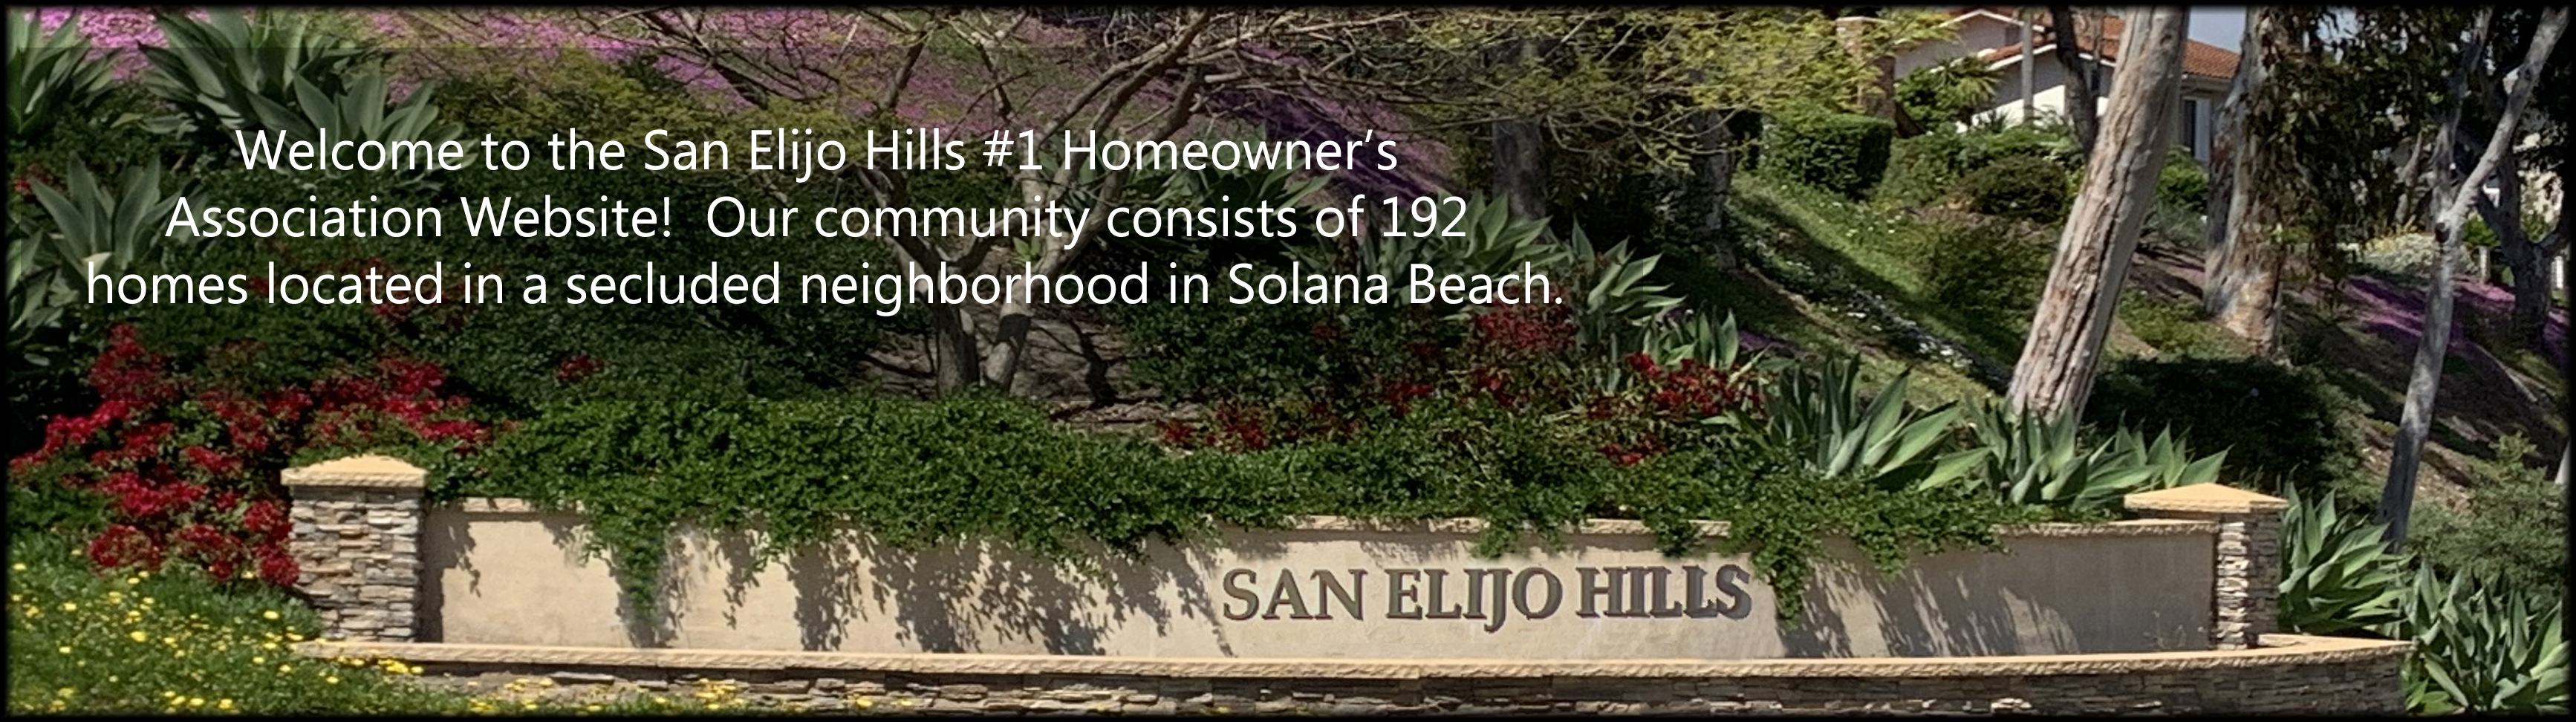 Welcome to San Elijo Hills!